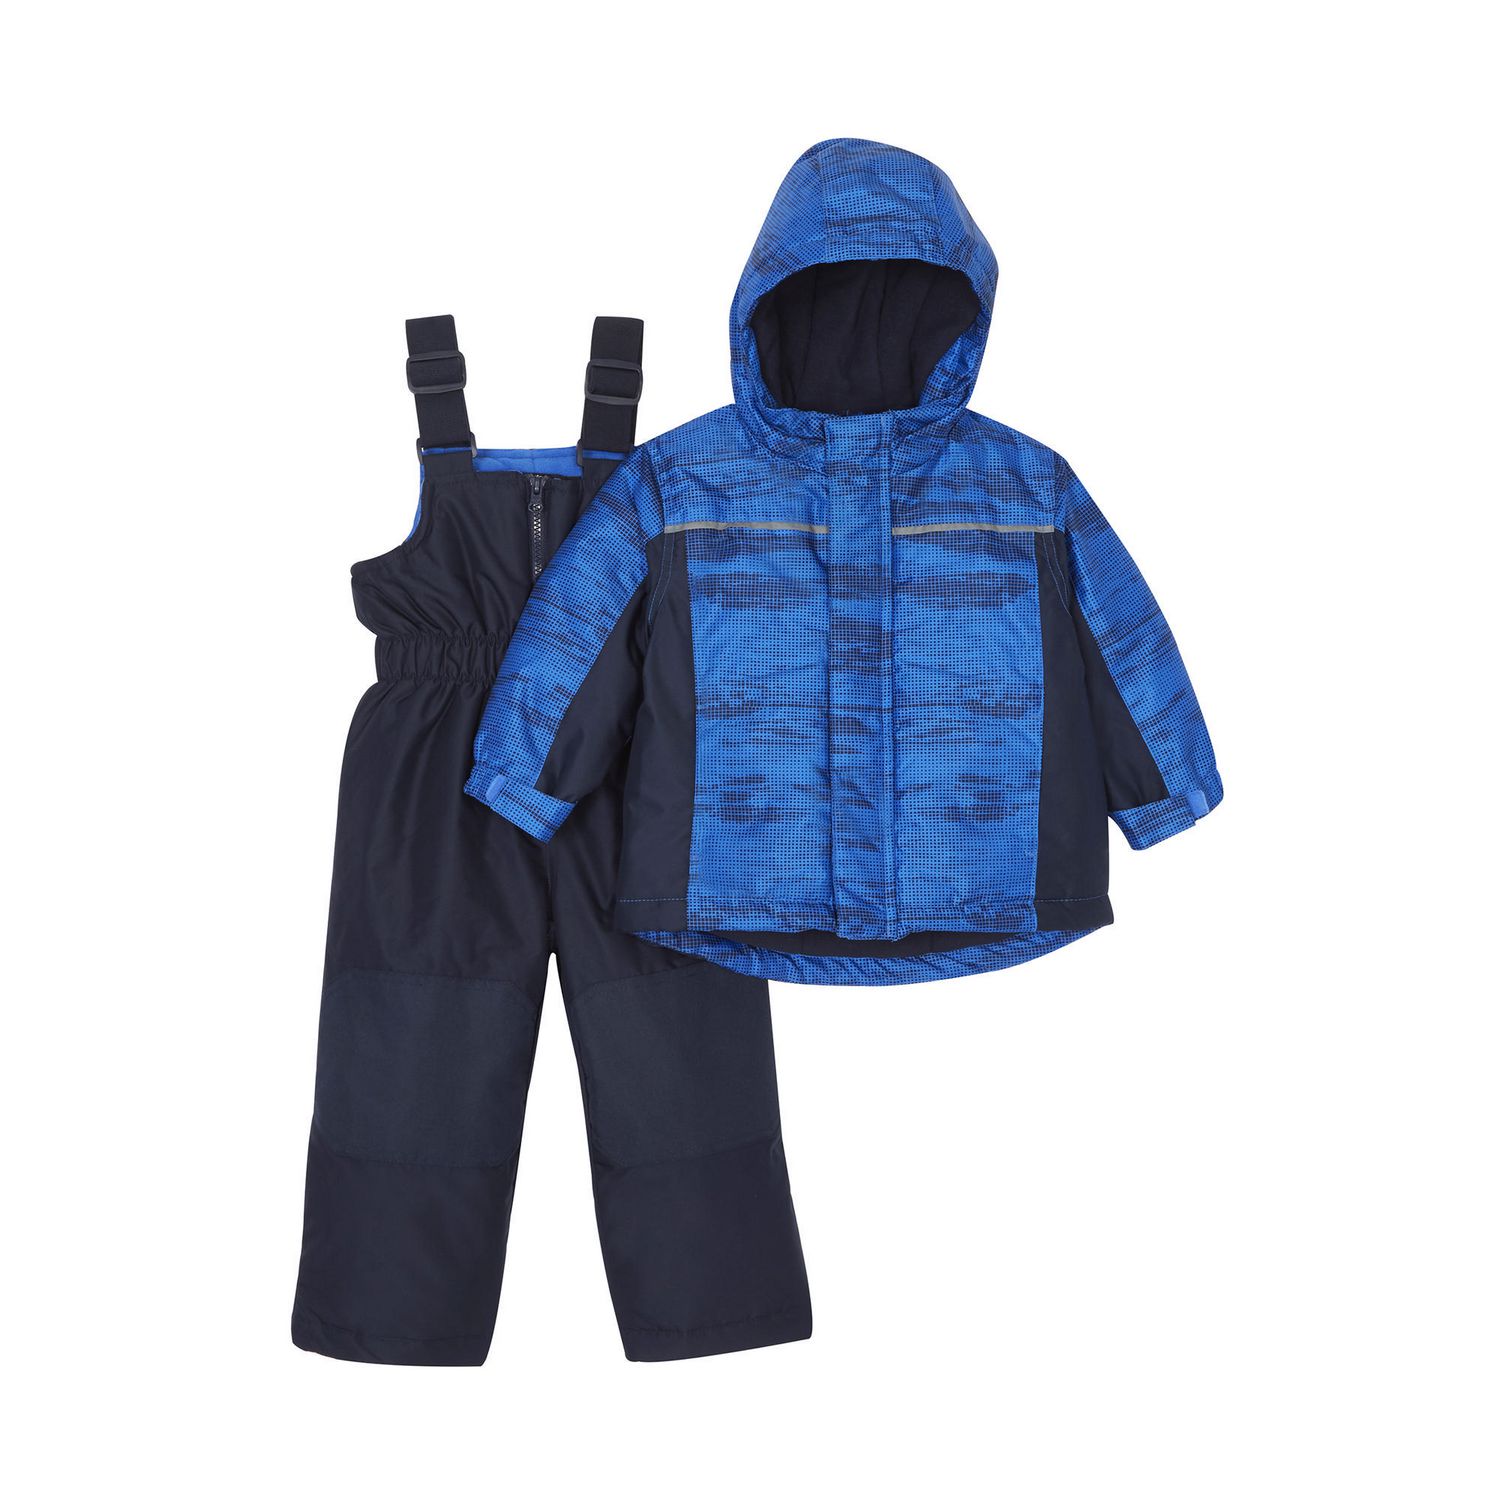 George Toddler Boys' Snowsuit | Walmart Canada